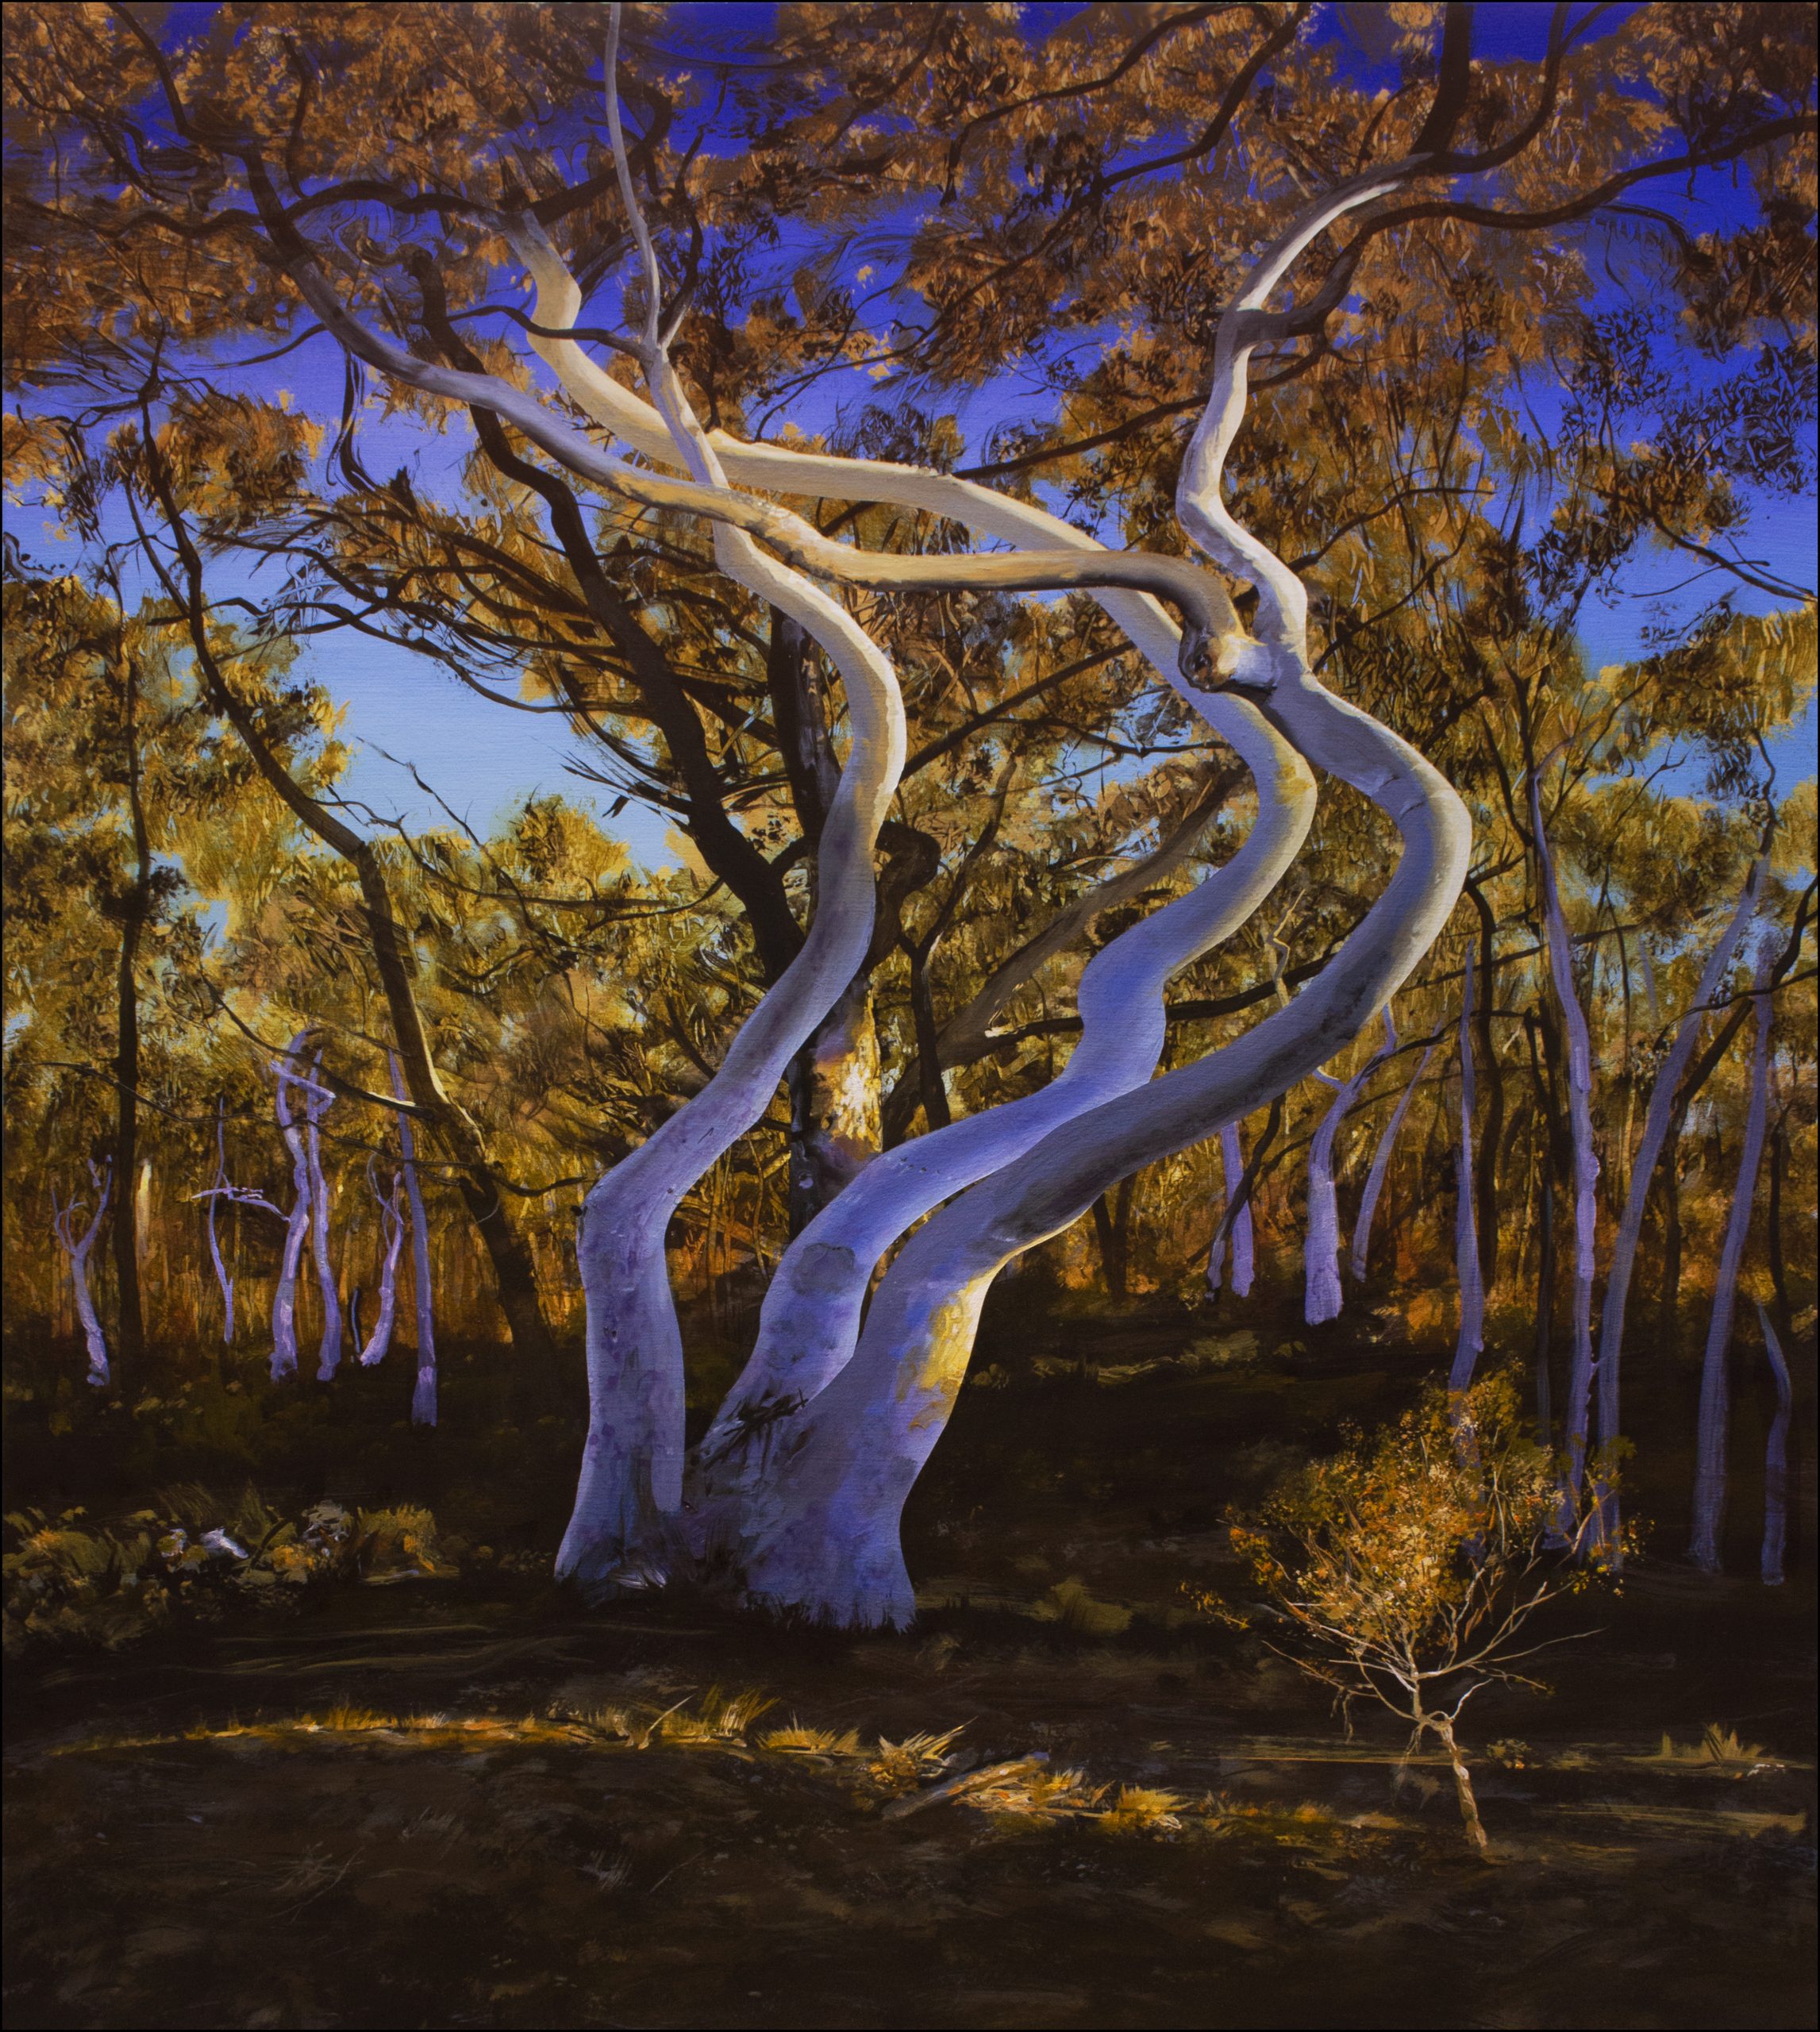 Neil Taylor 'Burramoku Blues' acrylic on canvas 153 x 137cm $17,600